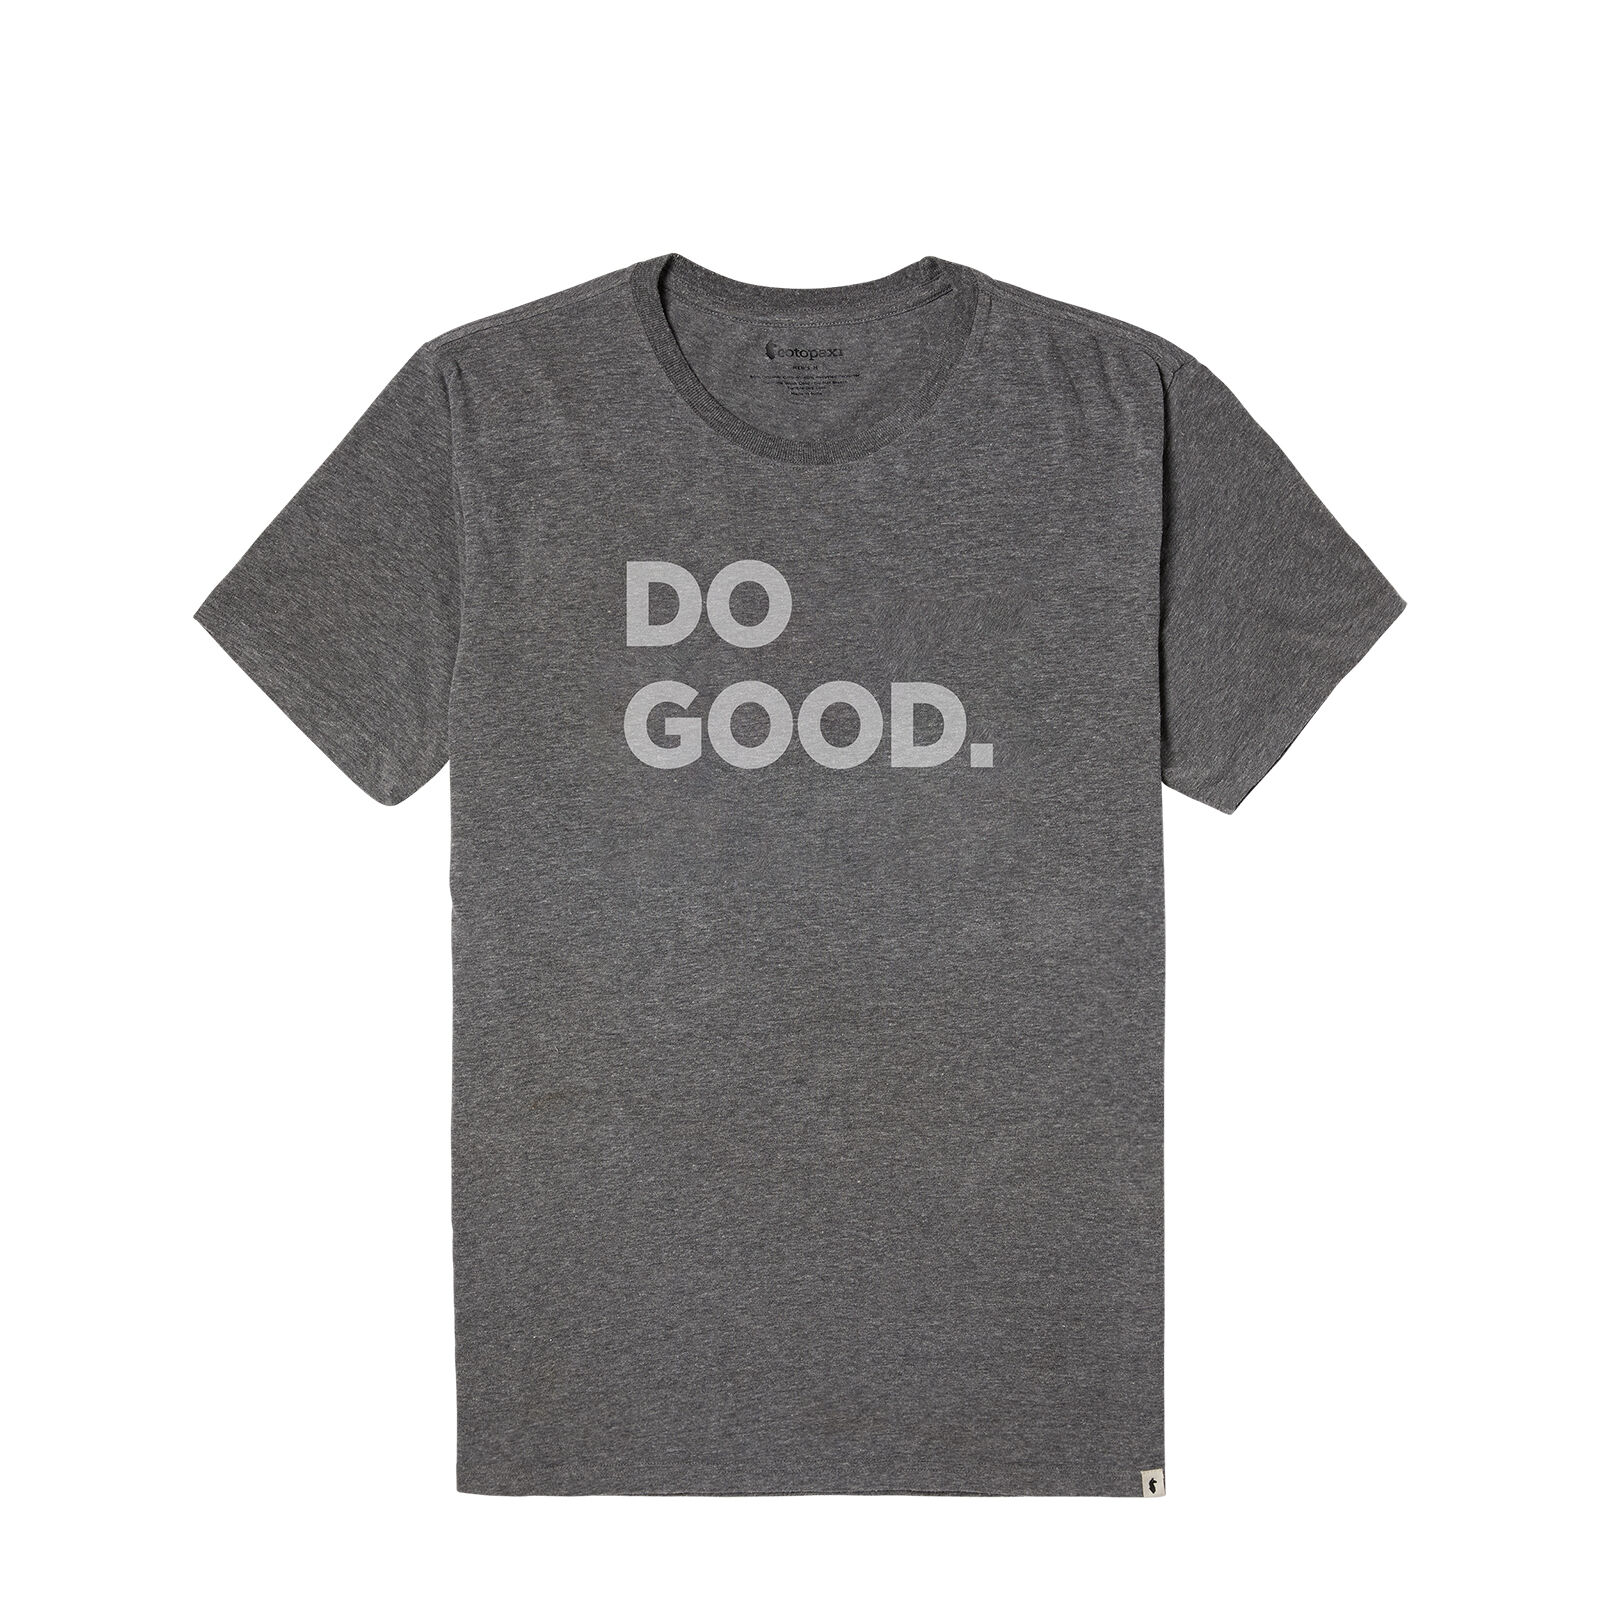 Cotopaxi Do Good - T-shirt - Men's